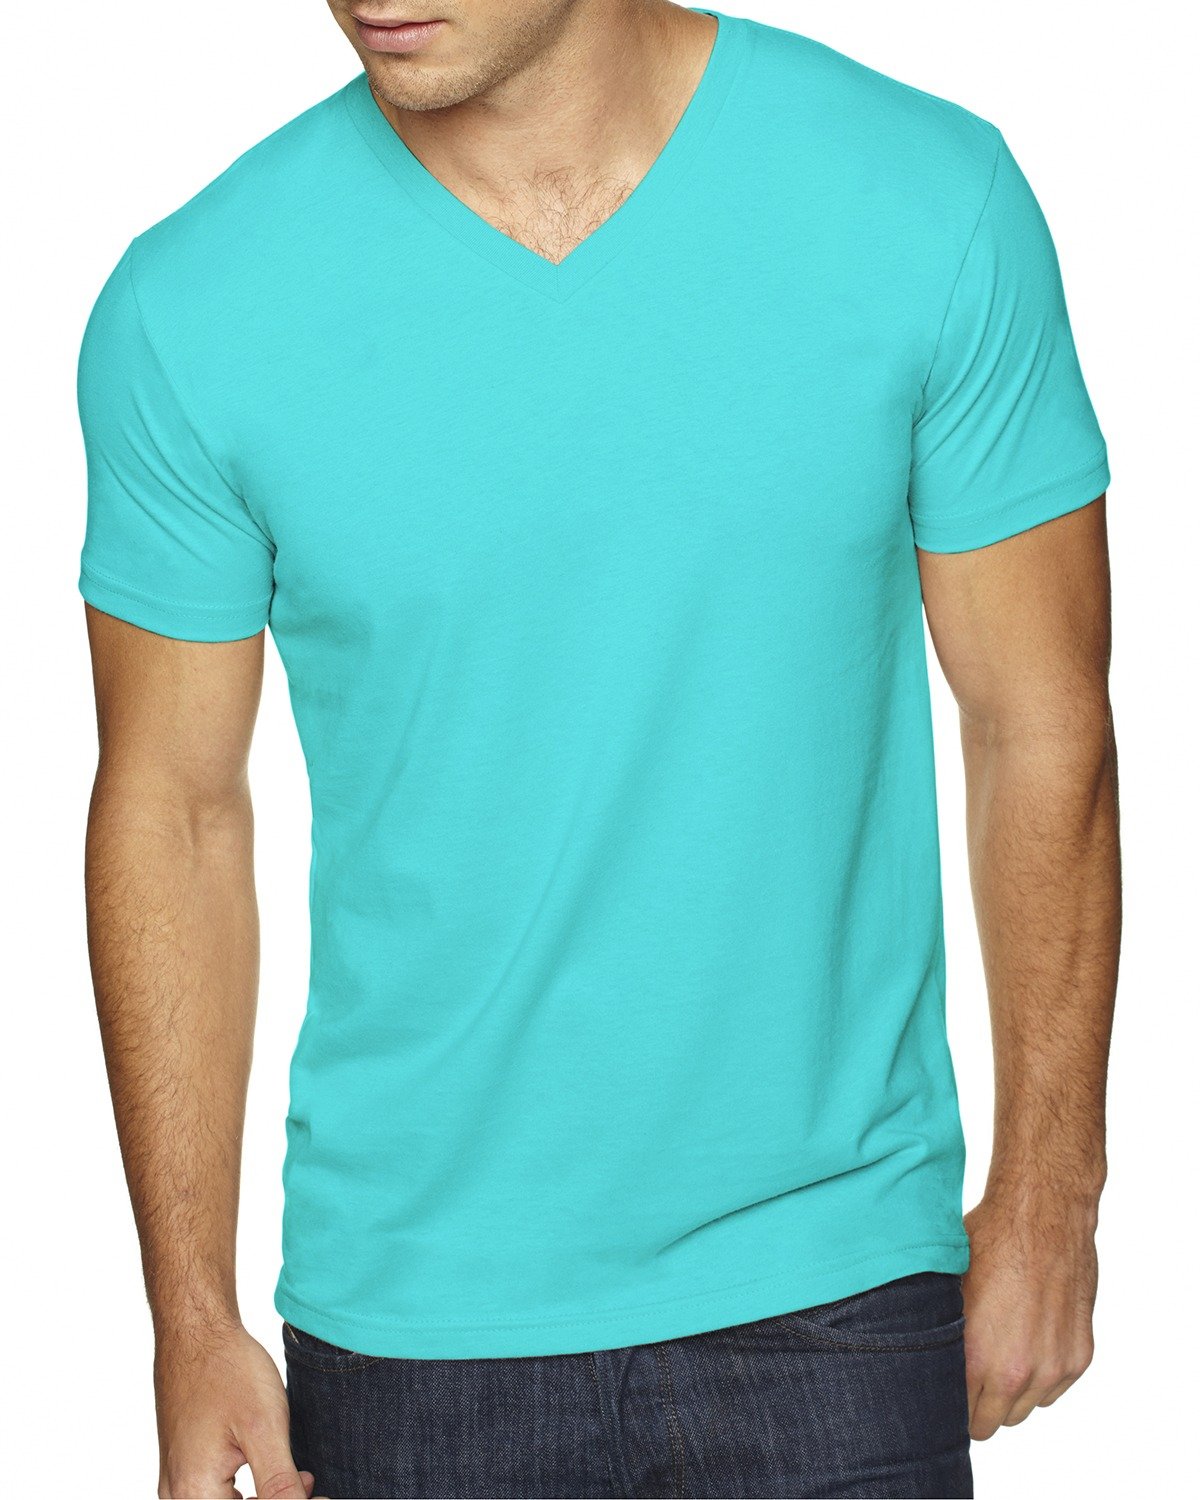 Next Level Men's Sueded V-Neck T-Shirt TAHITI BLUE 